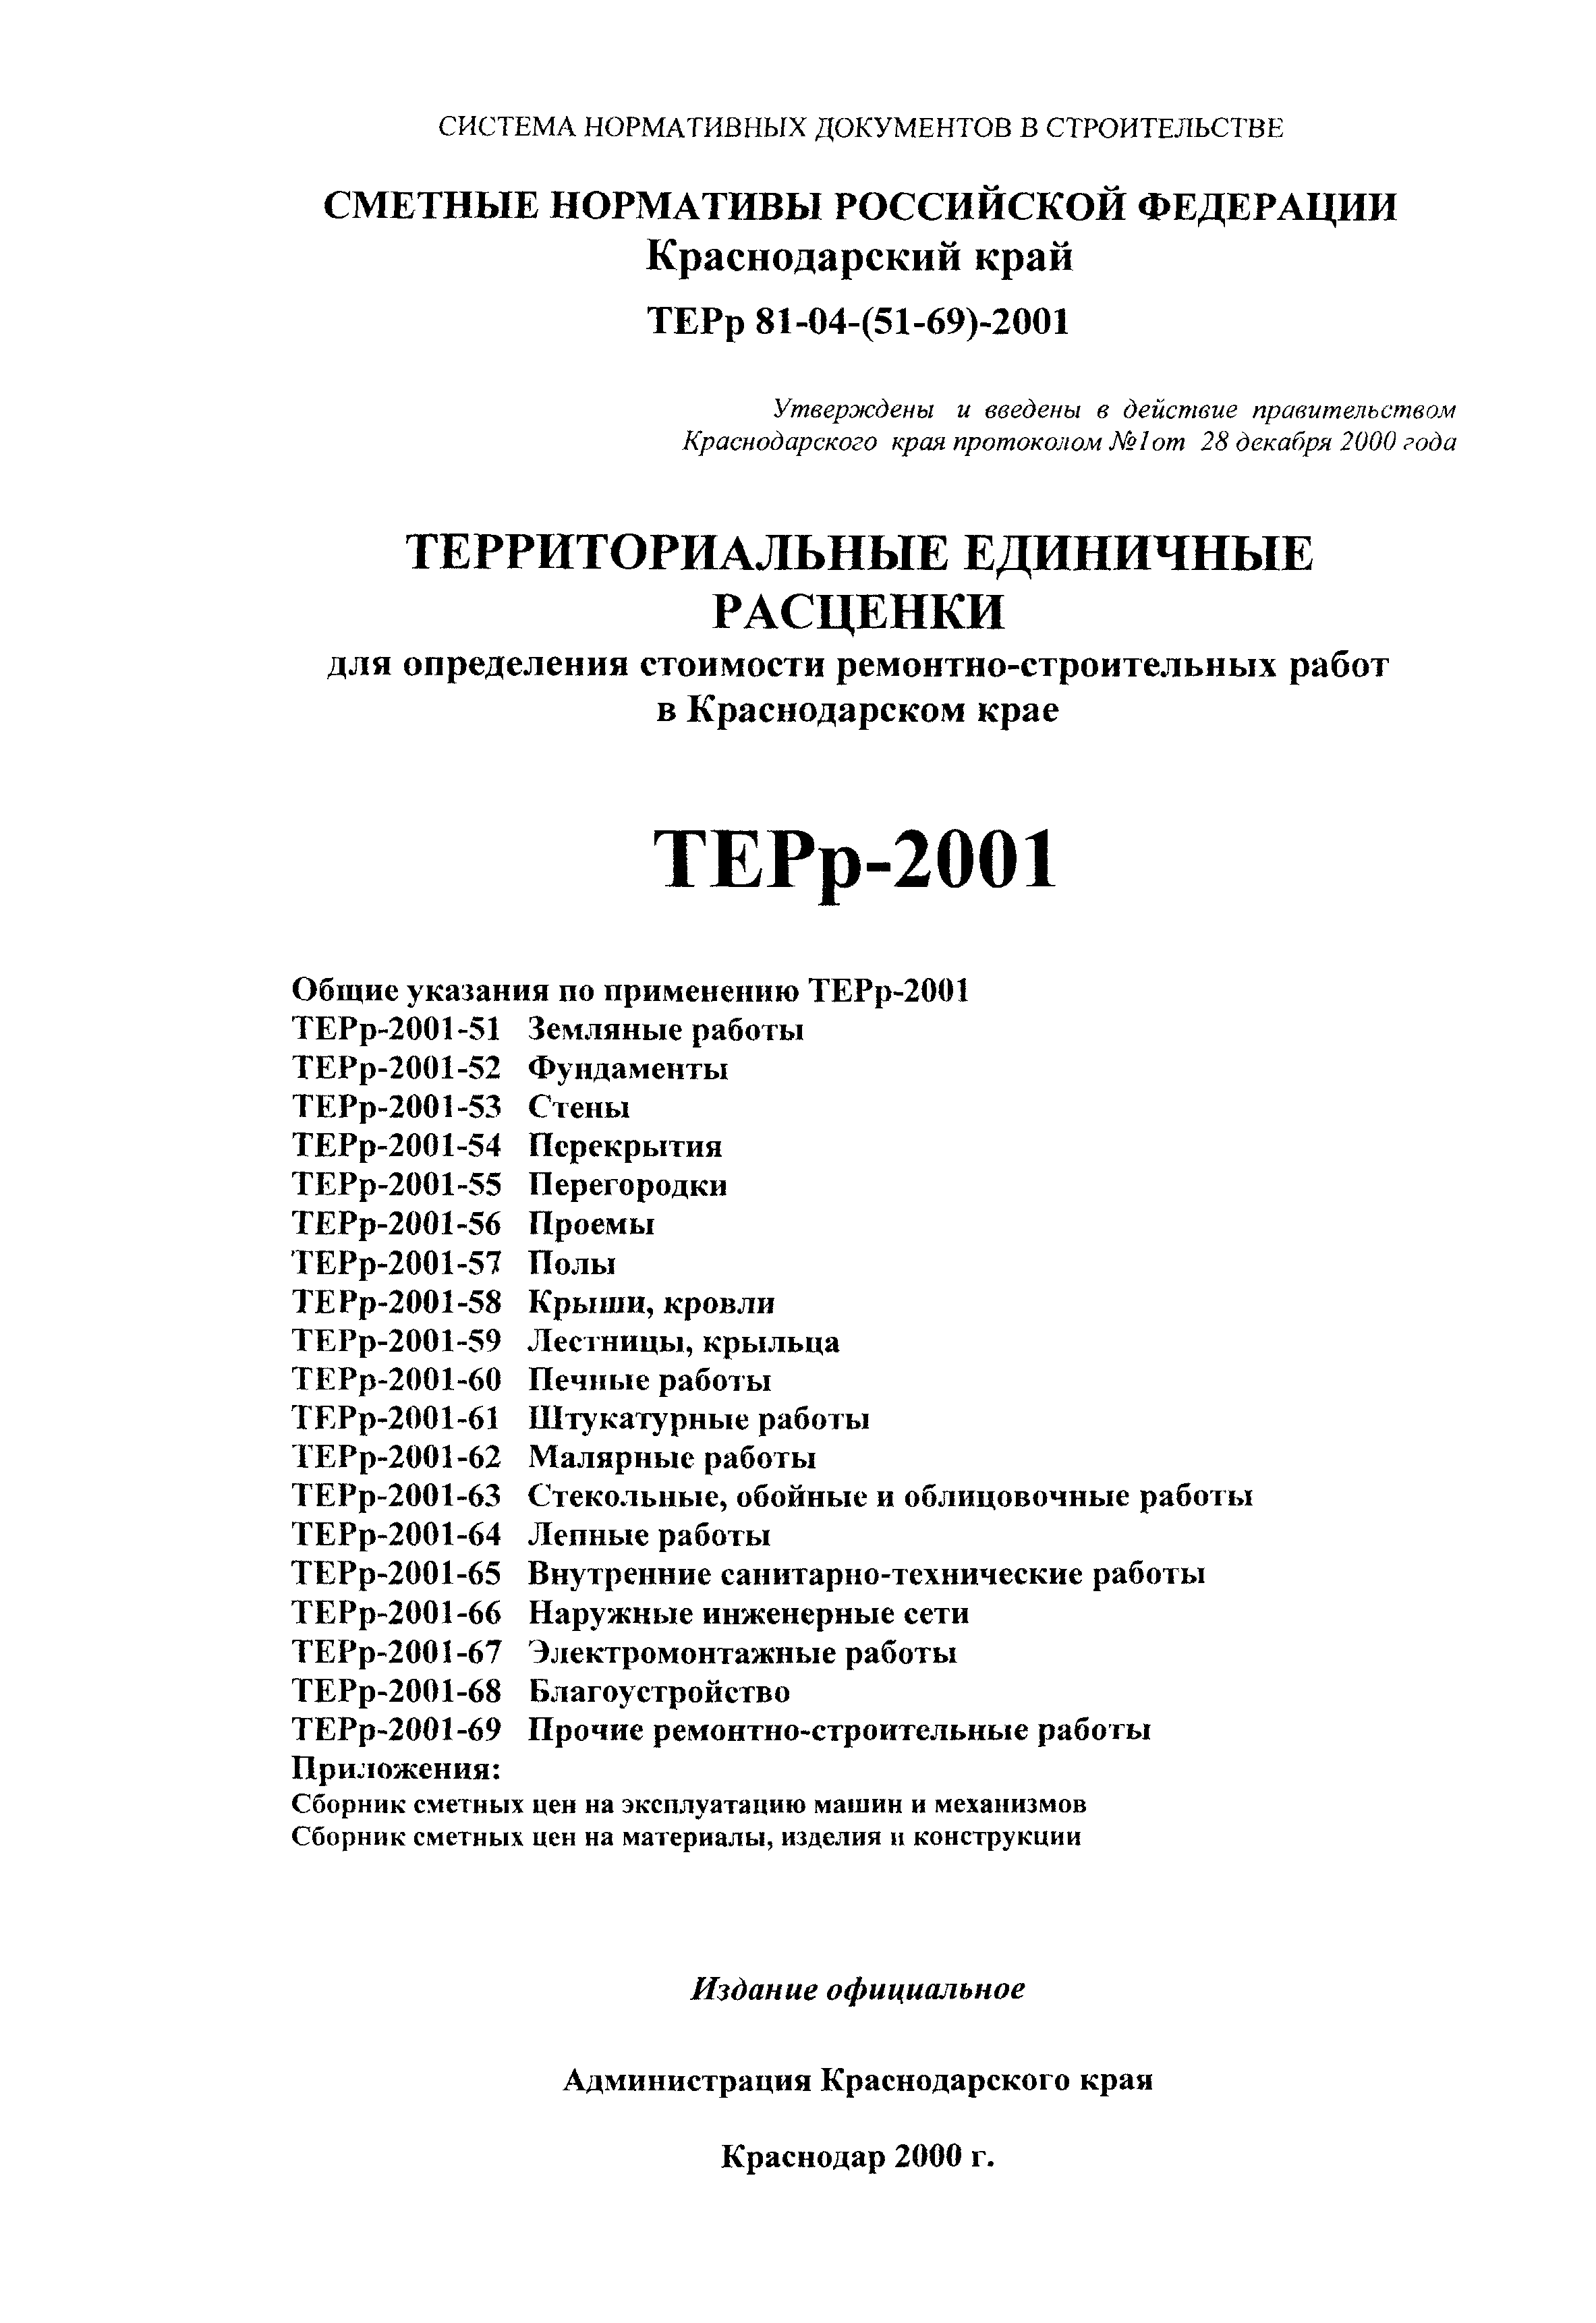 ТЕРр Краснодарский край 2001-61